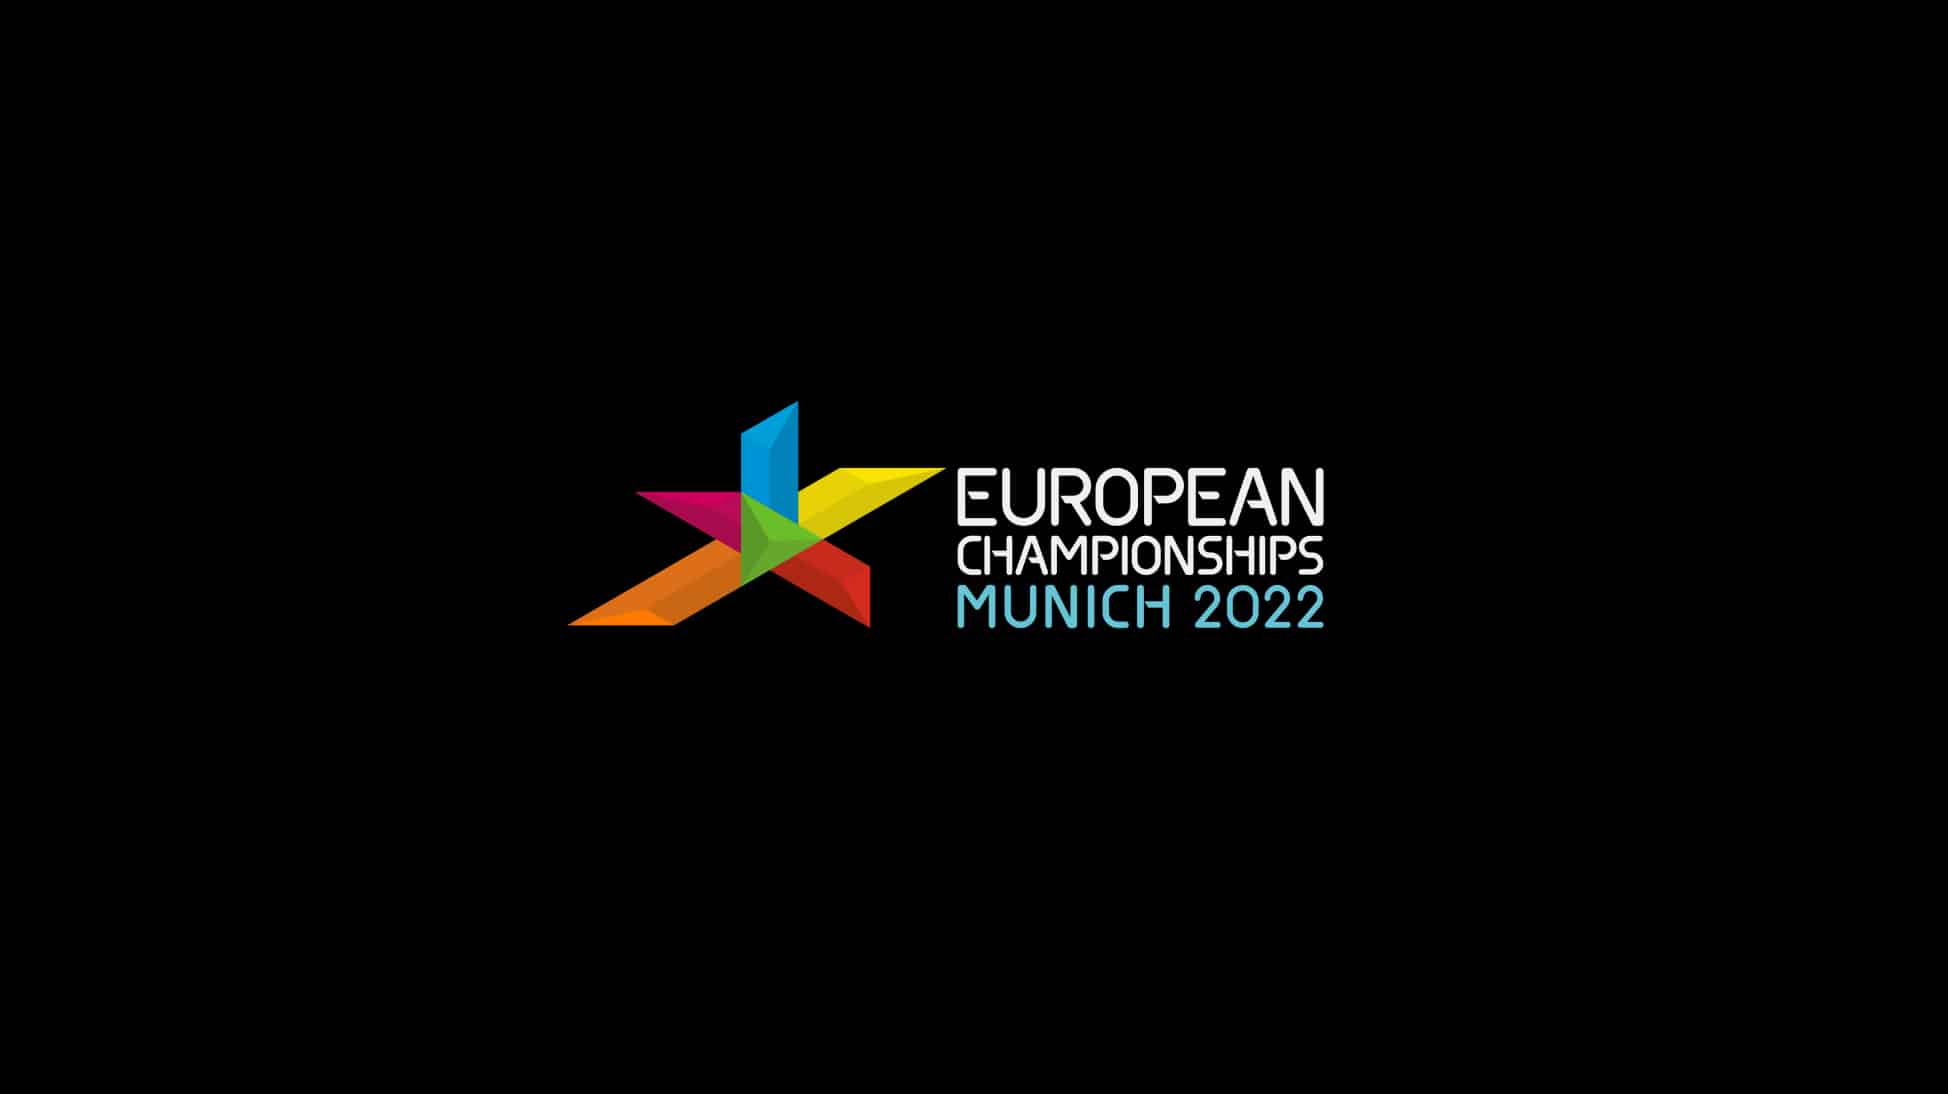 European champions munich logo